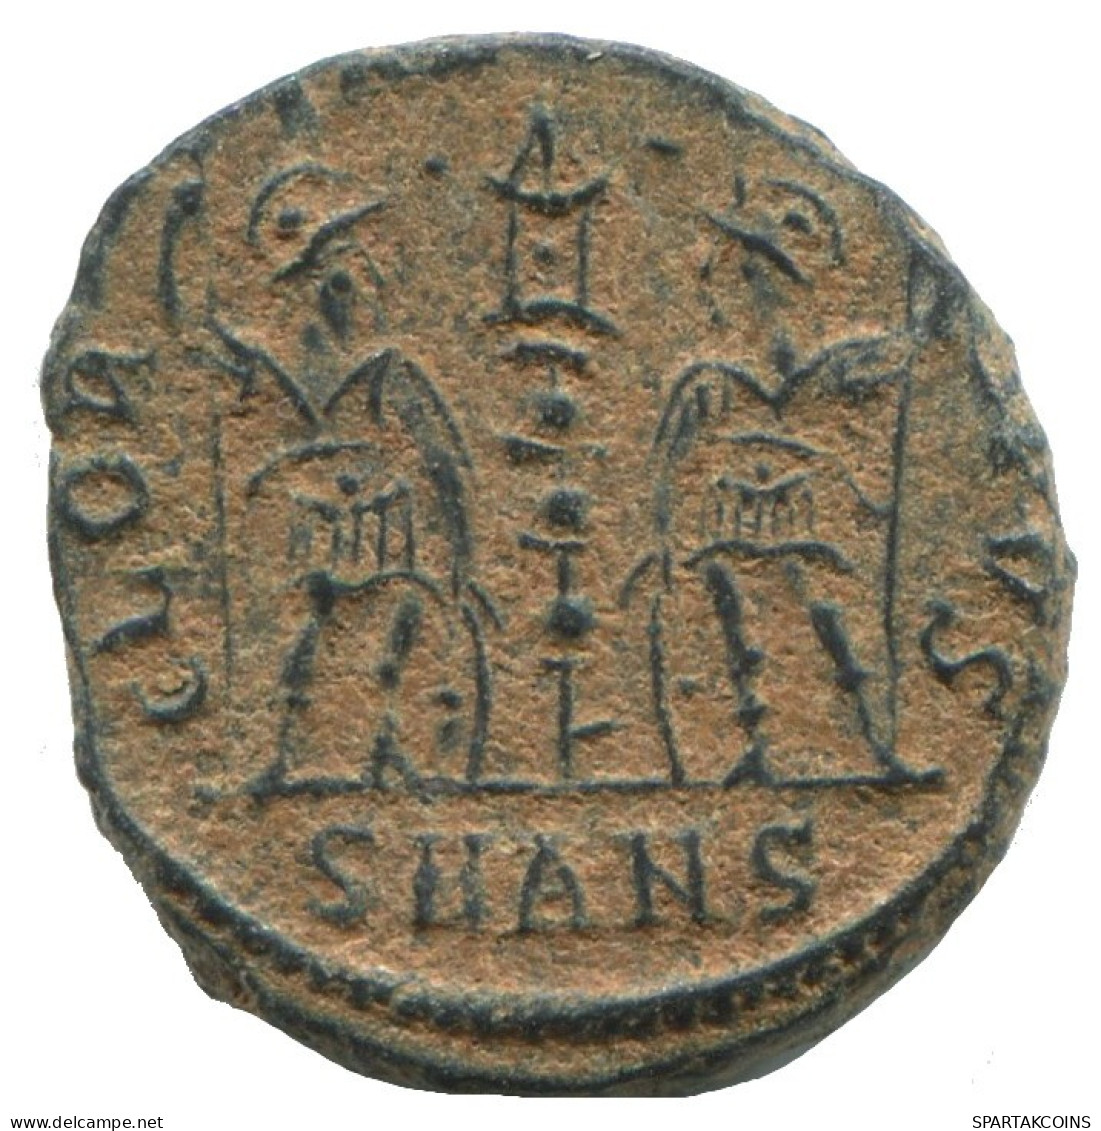 CONSTANTINE II Antioch SMANS AD330-335 GLORIA EXERCITVS 2,1g/15mm ANN1222.9.D.A - El Impero Christiano (307 / 363)